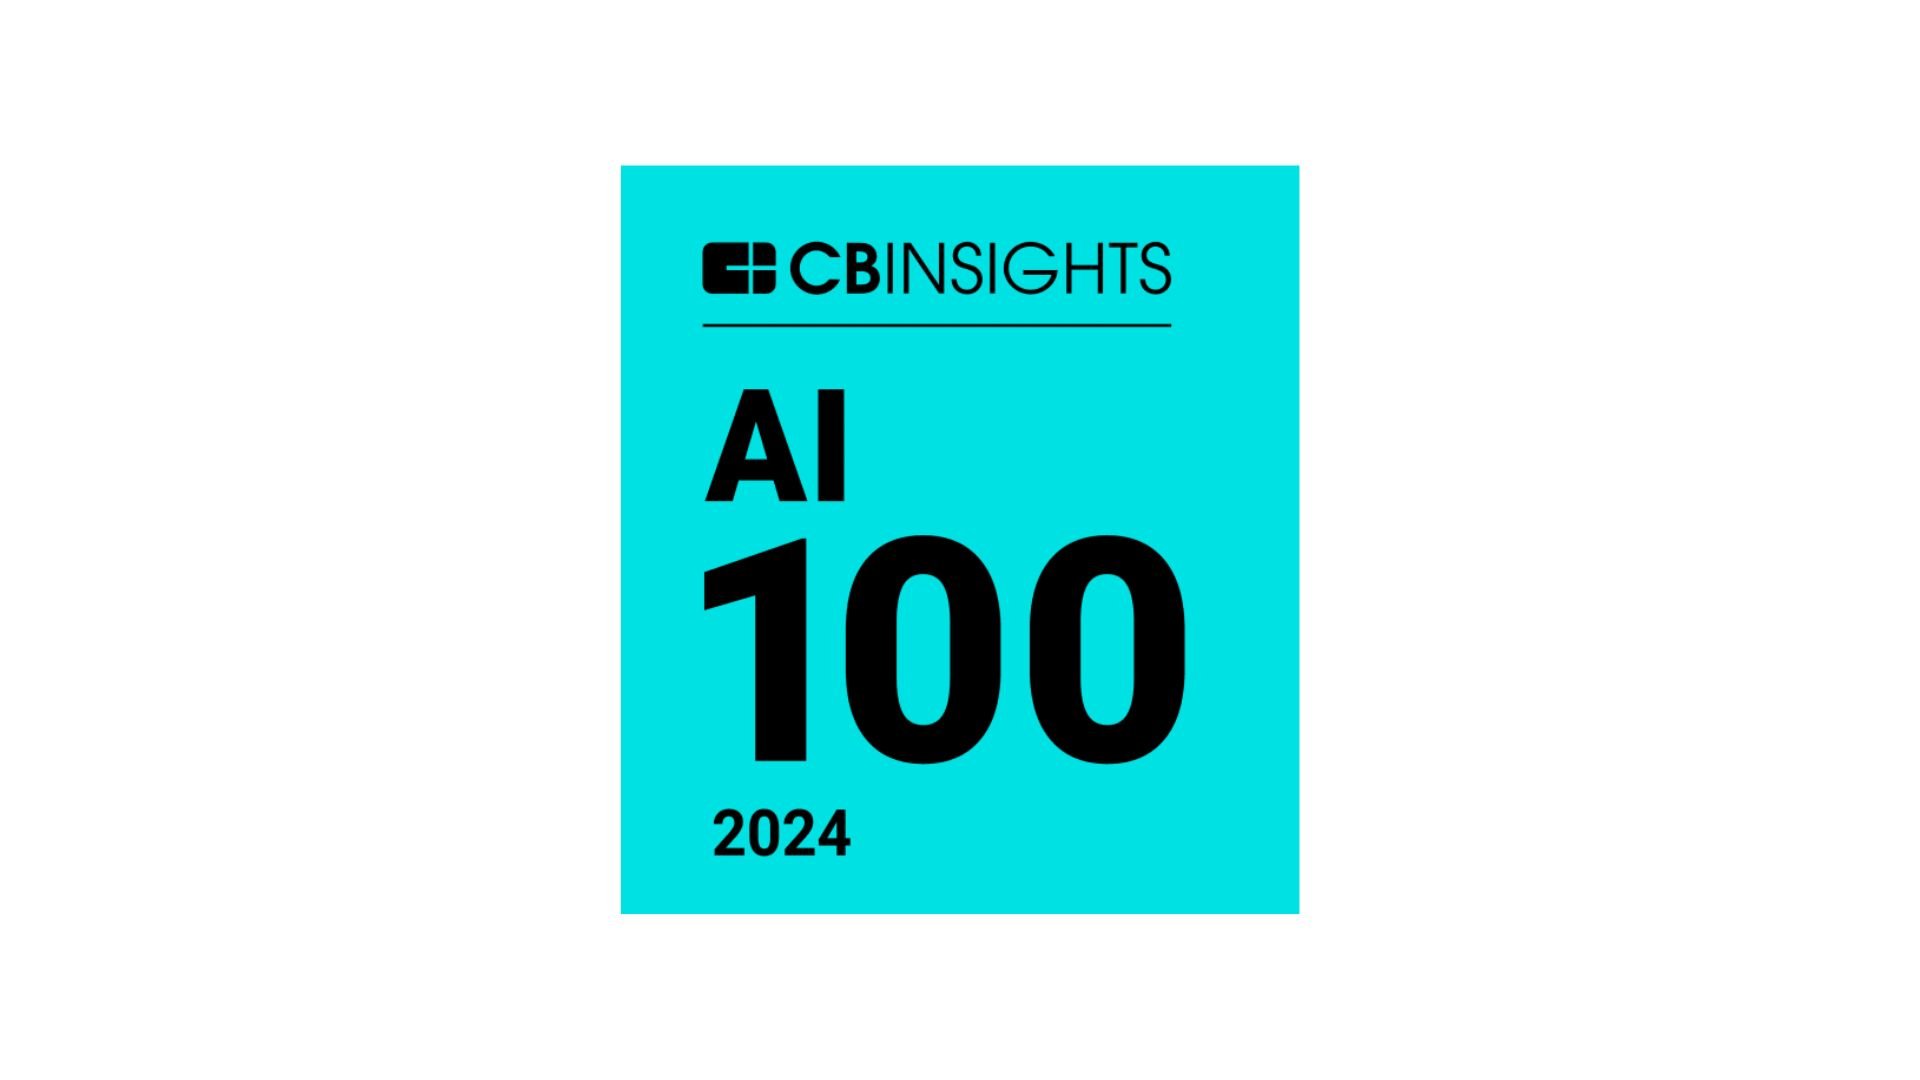 CB Insights AI 100 2024